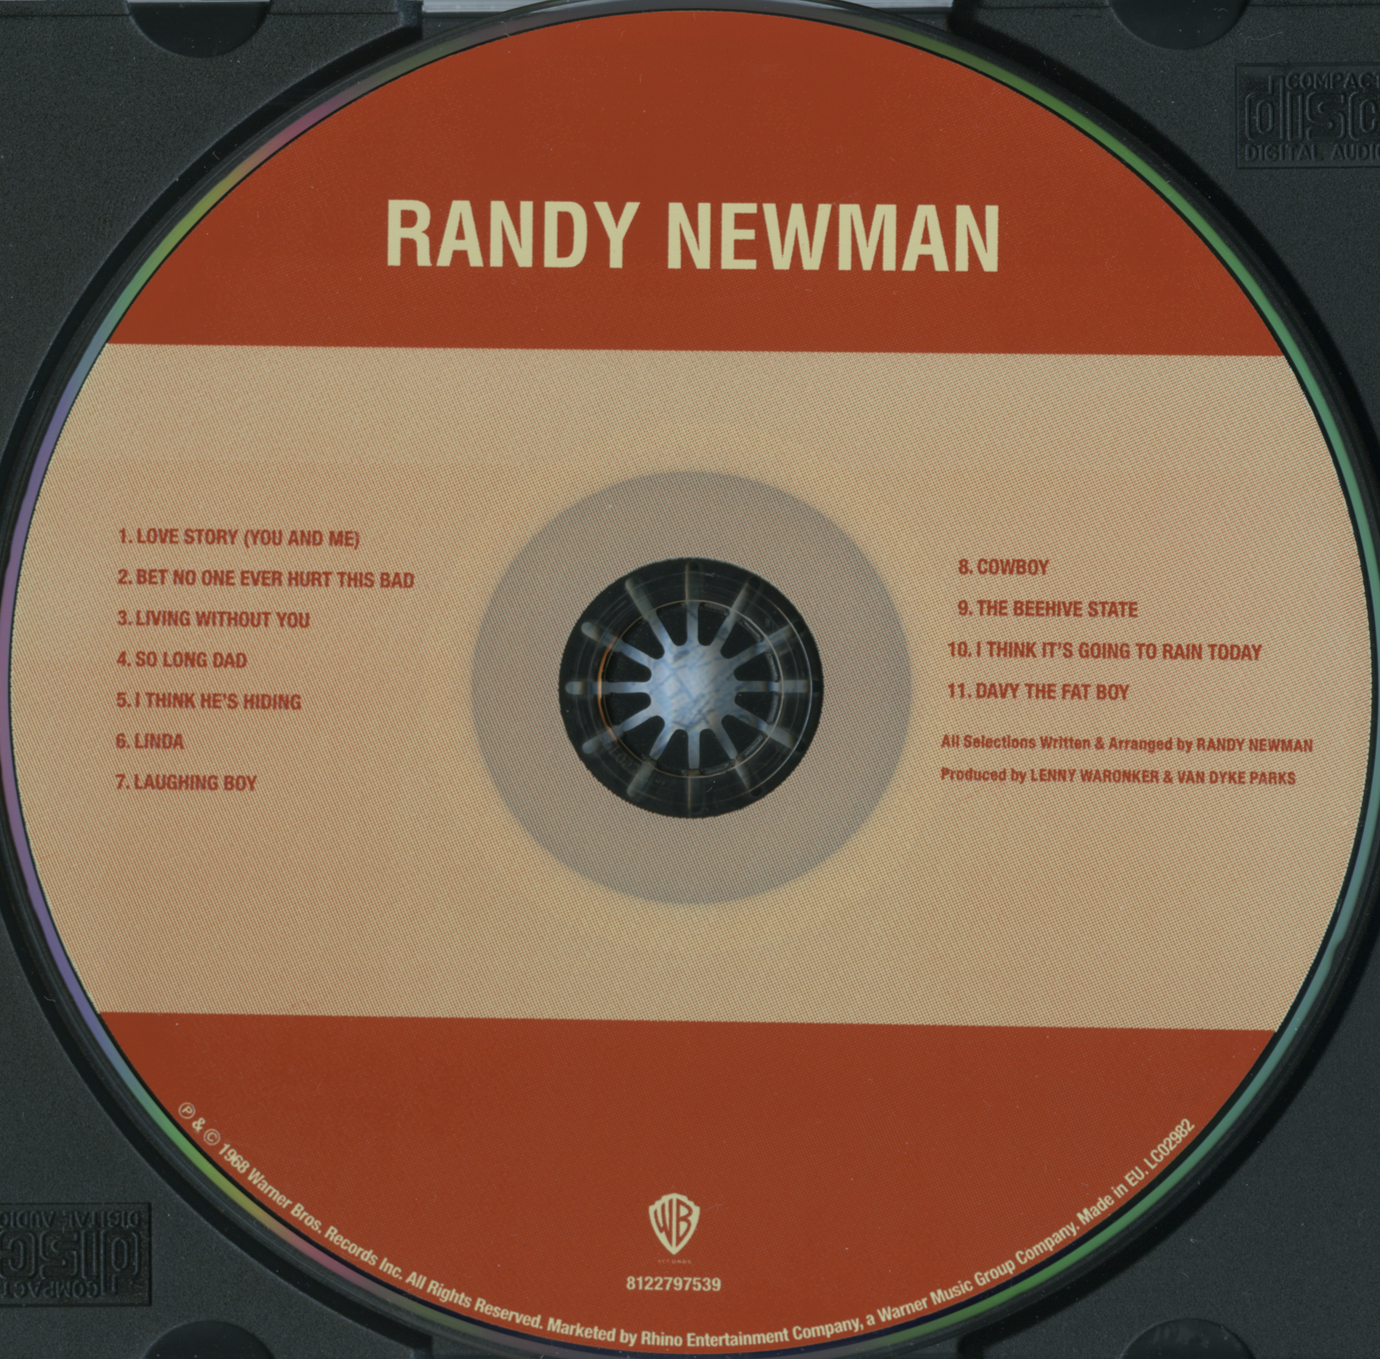 Randy Newman - Original Album Series (2011)